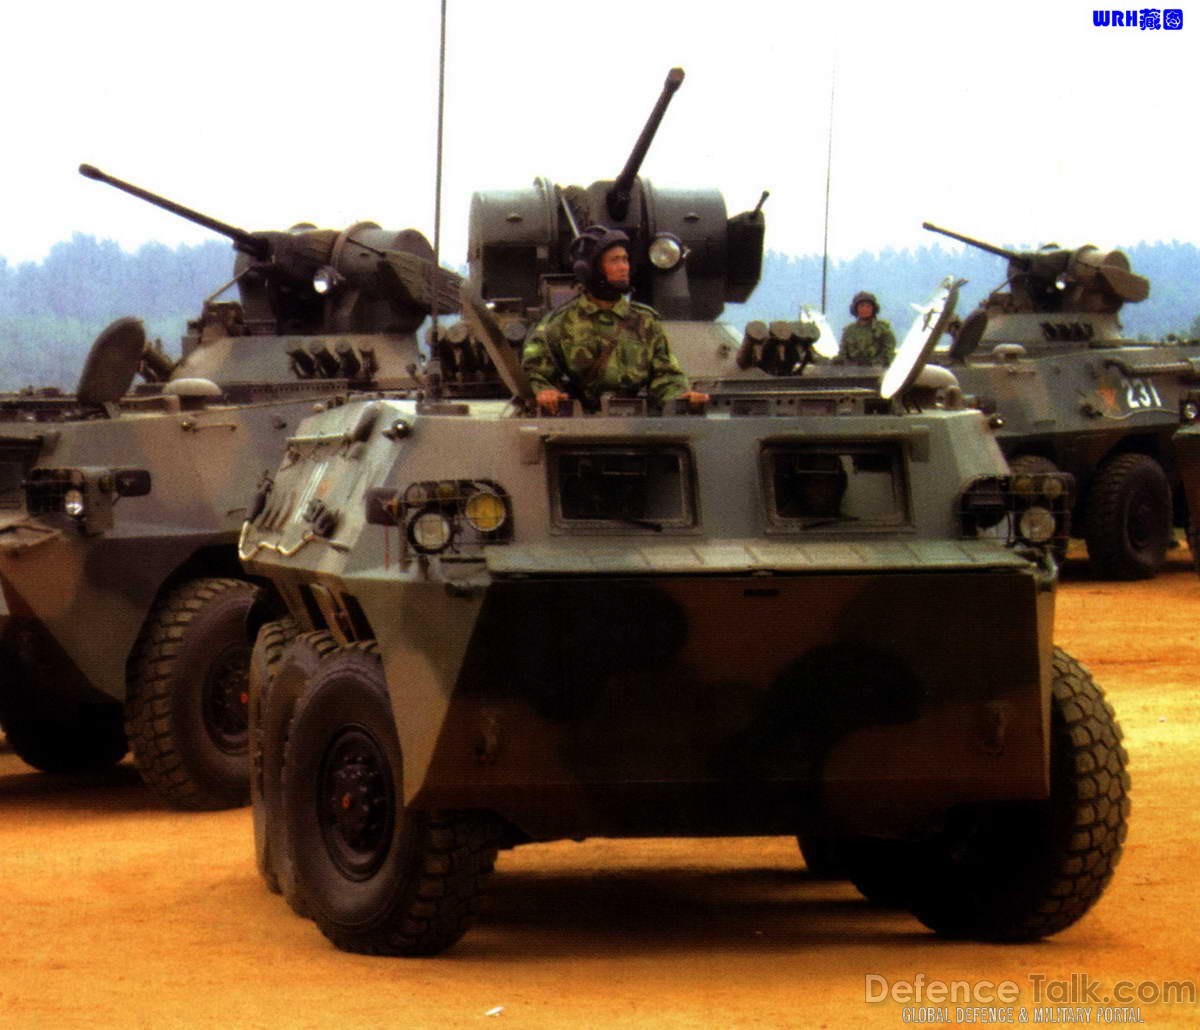 Type-92 APC - Peopleâs Liberation Army